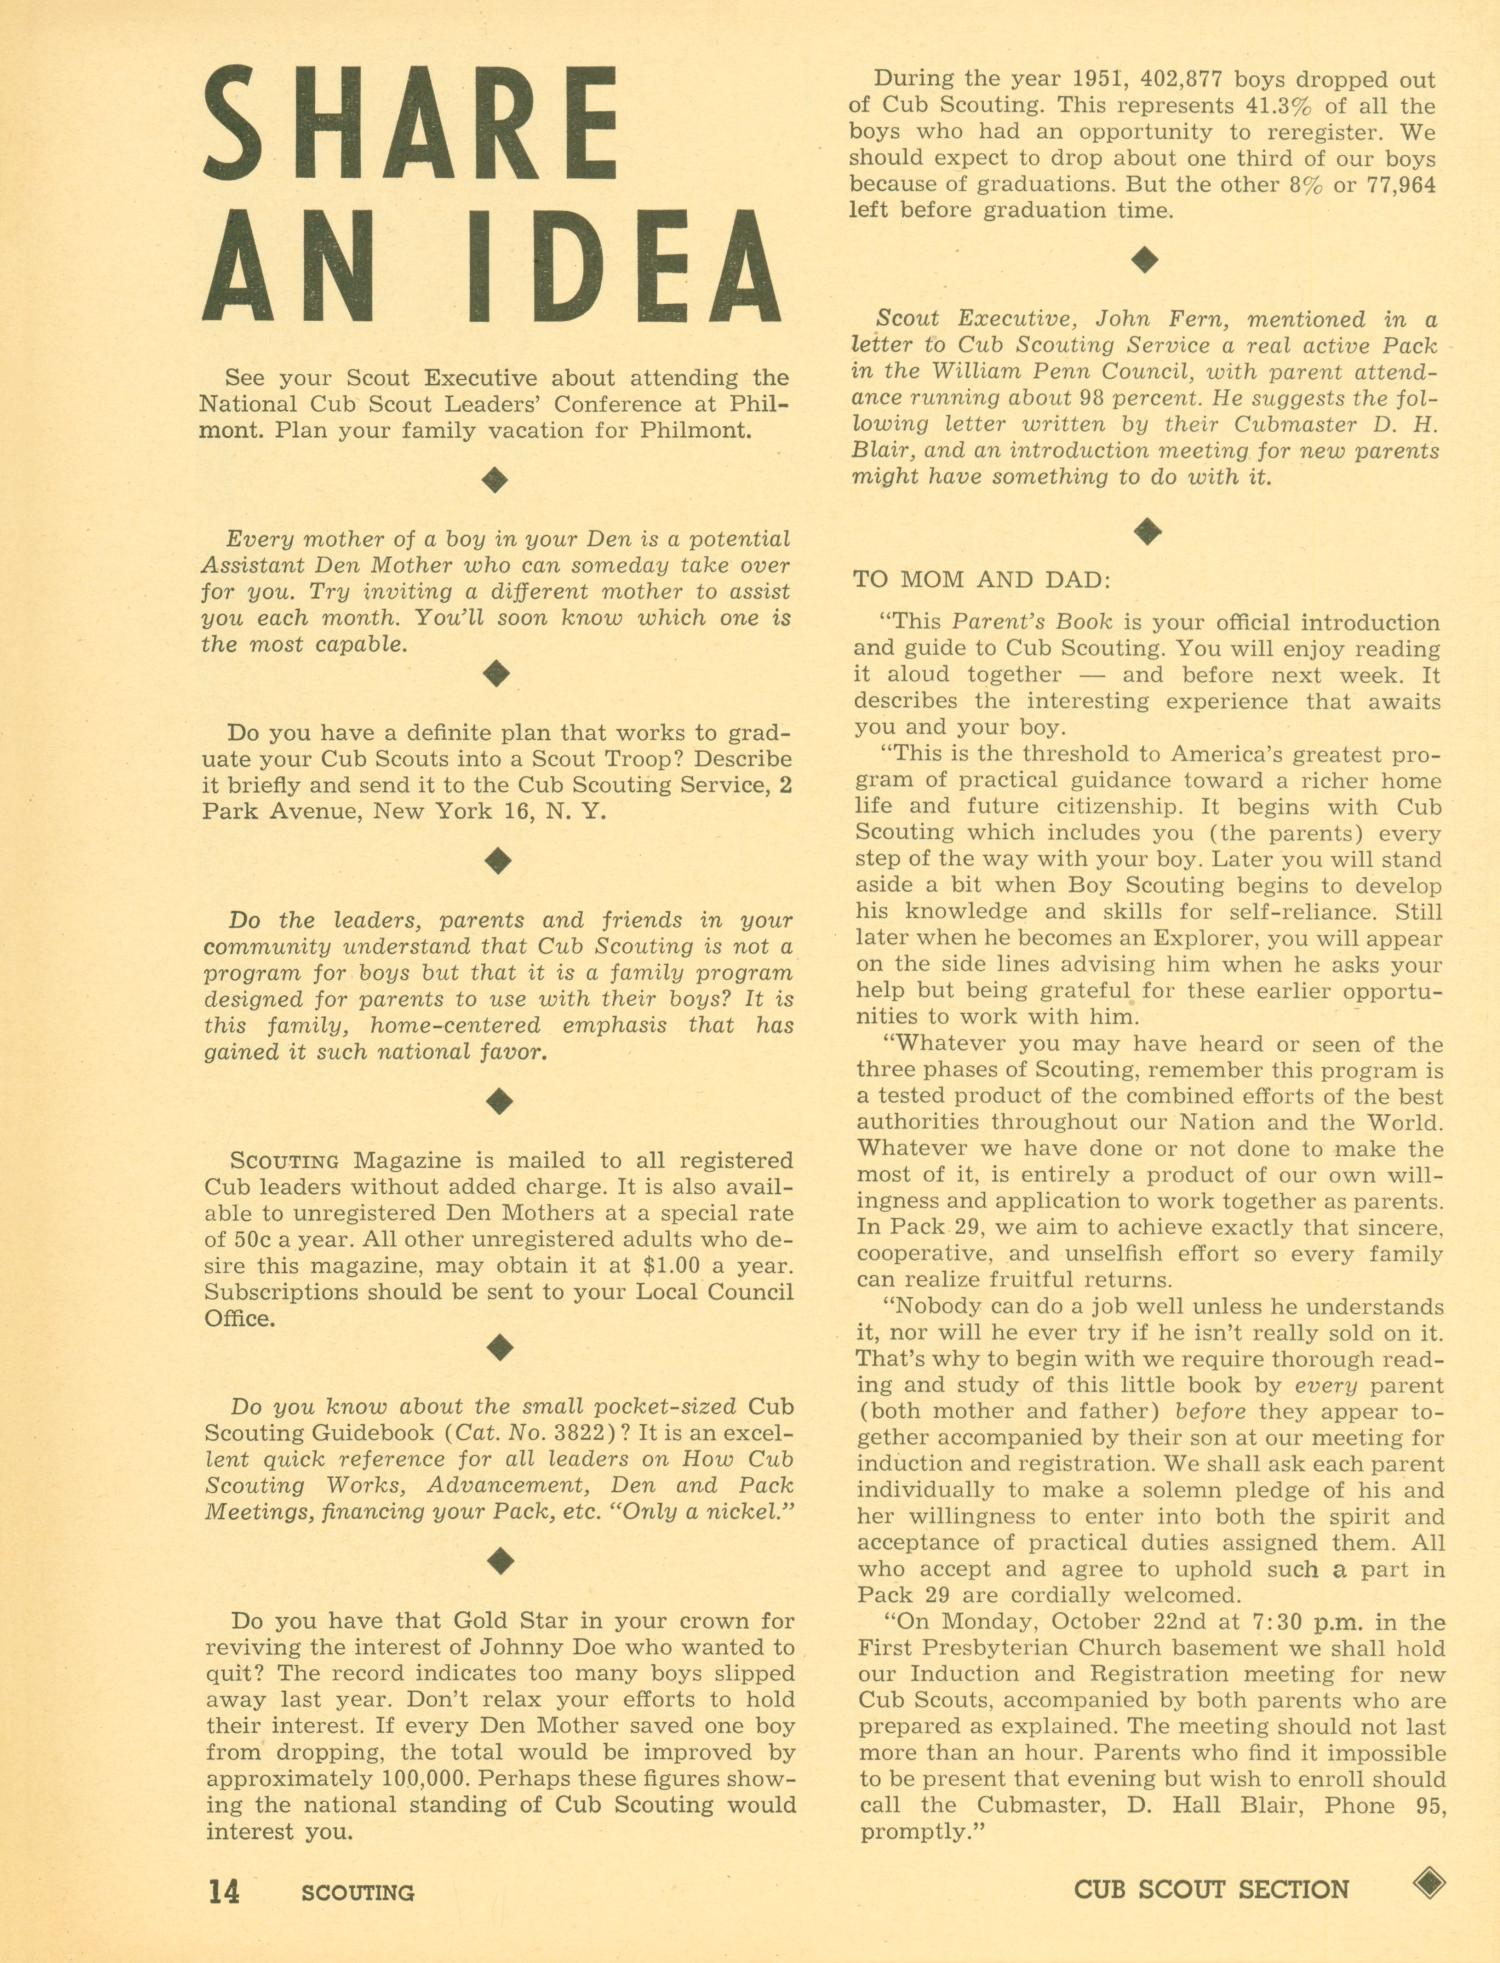 Scouting, Volume 40, Number 4, April 1952
                                                
                                                    14
                                                